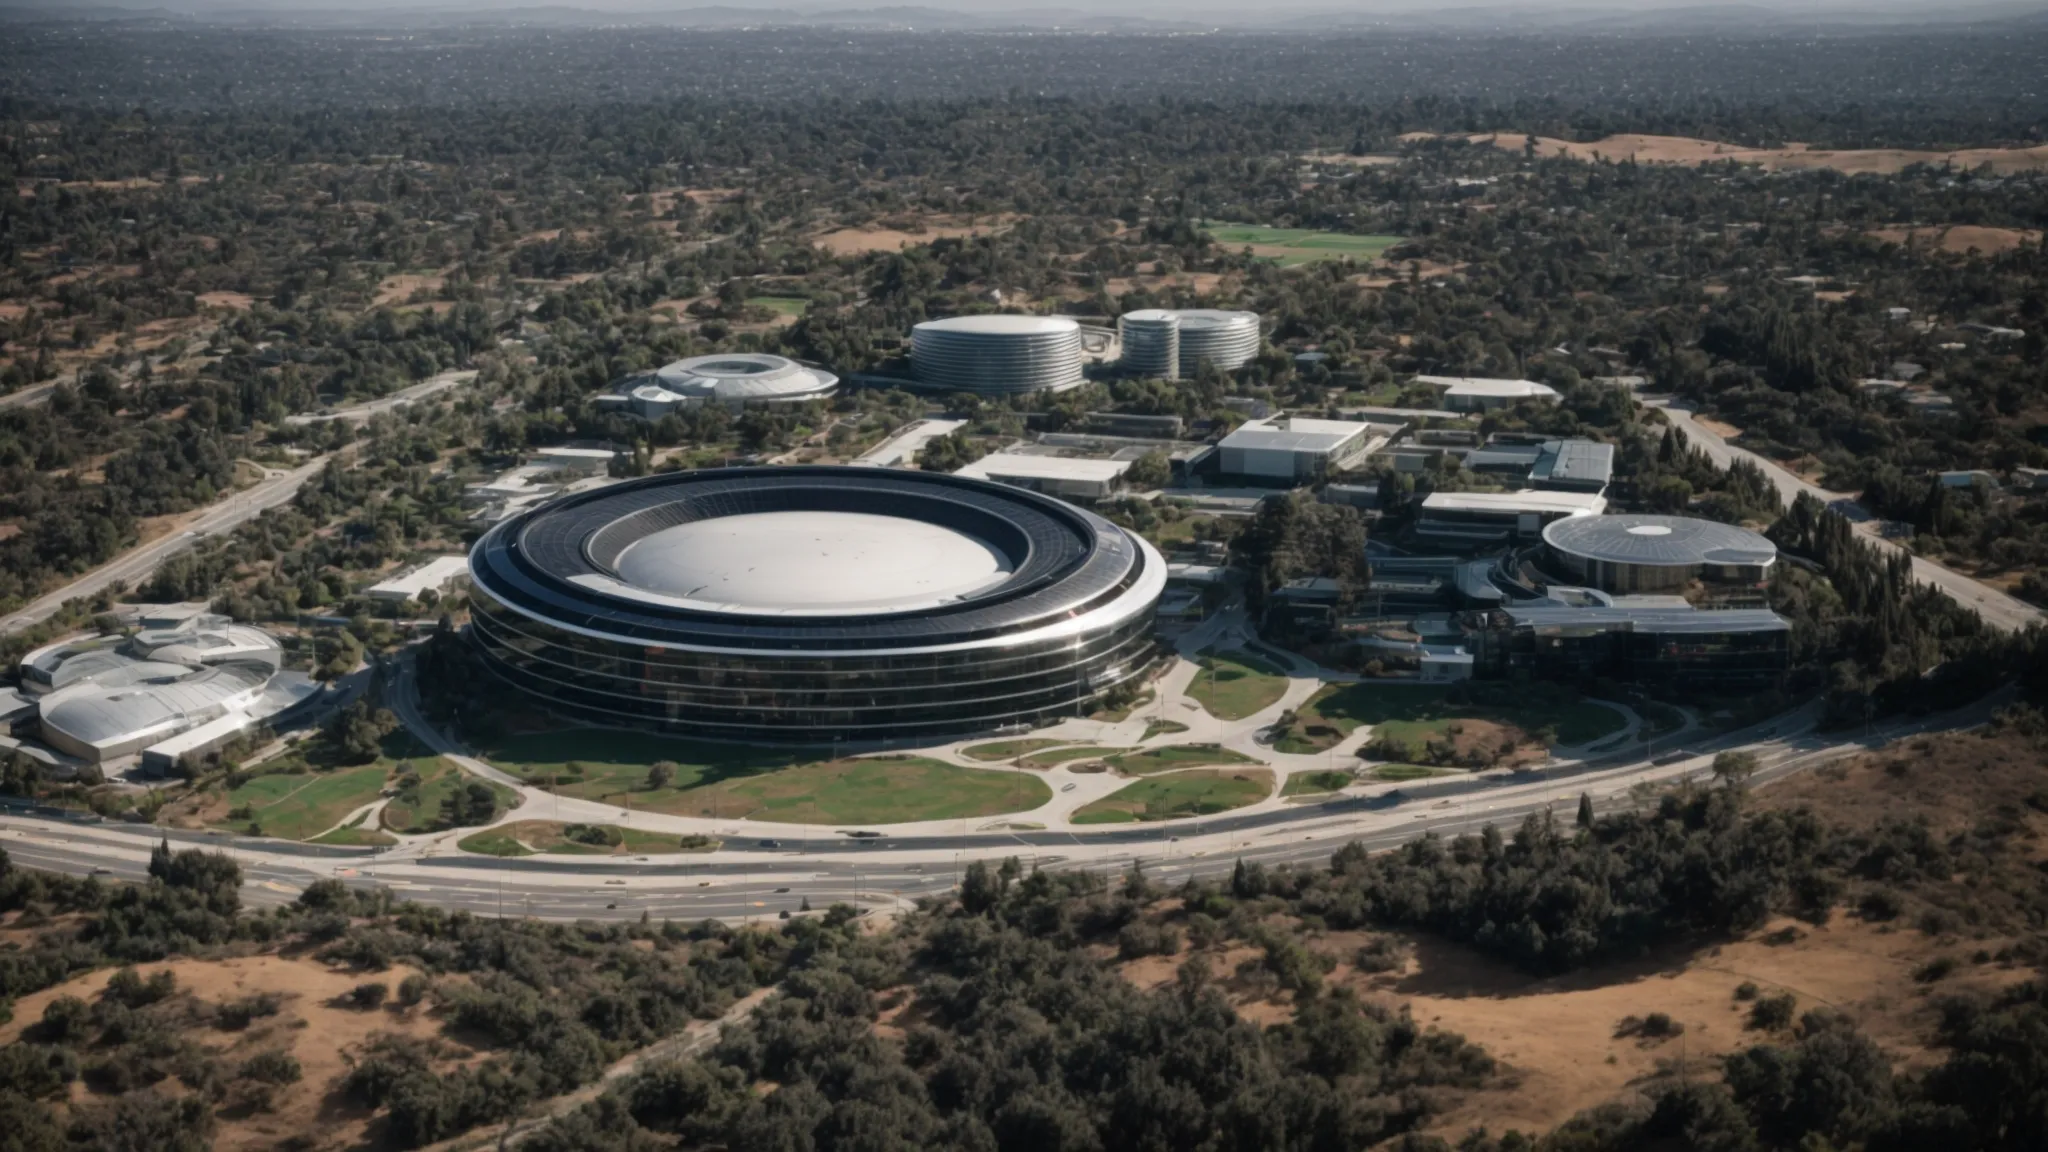 silicon valley landscape with apple's futuristic headquarters dominating cupertino's skyline.